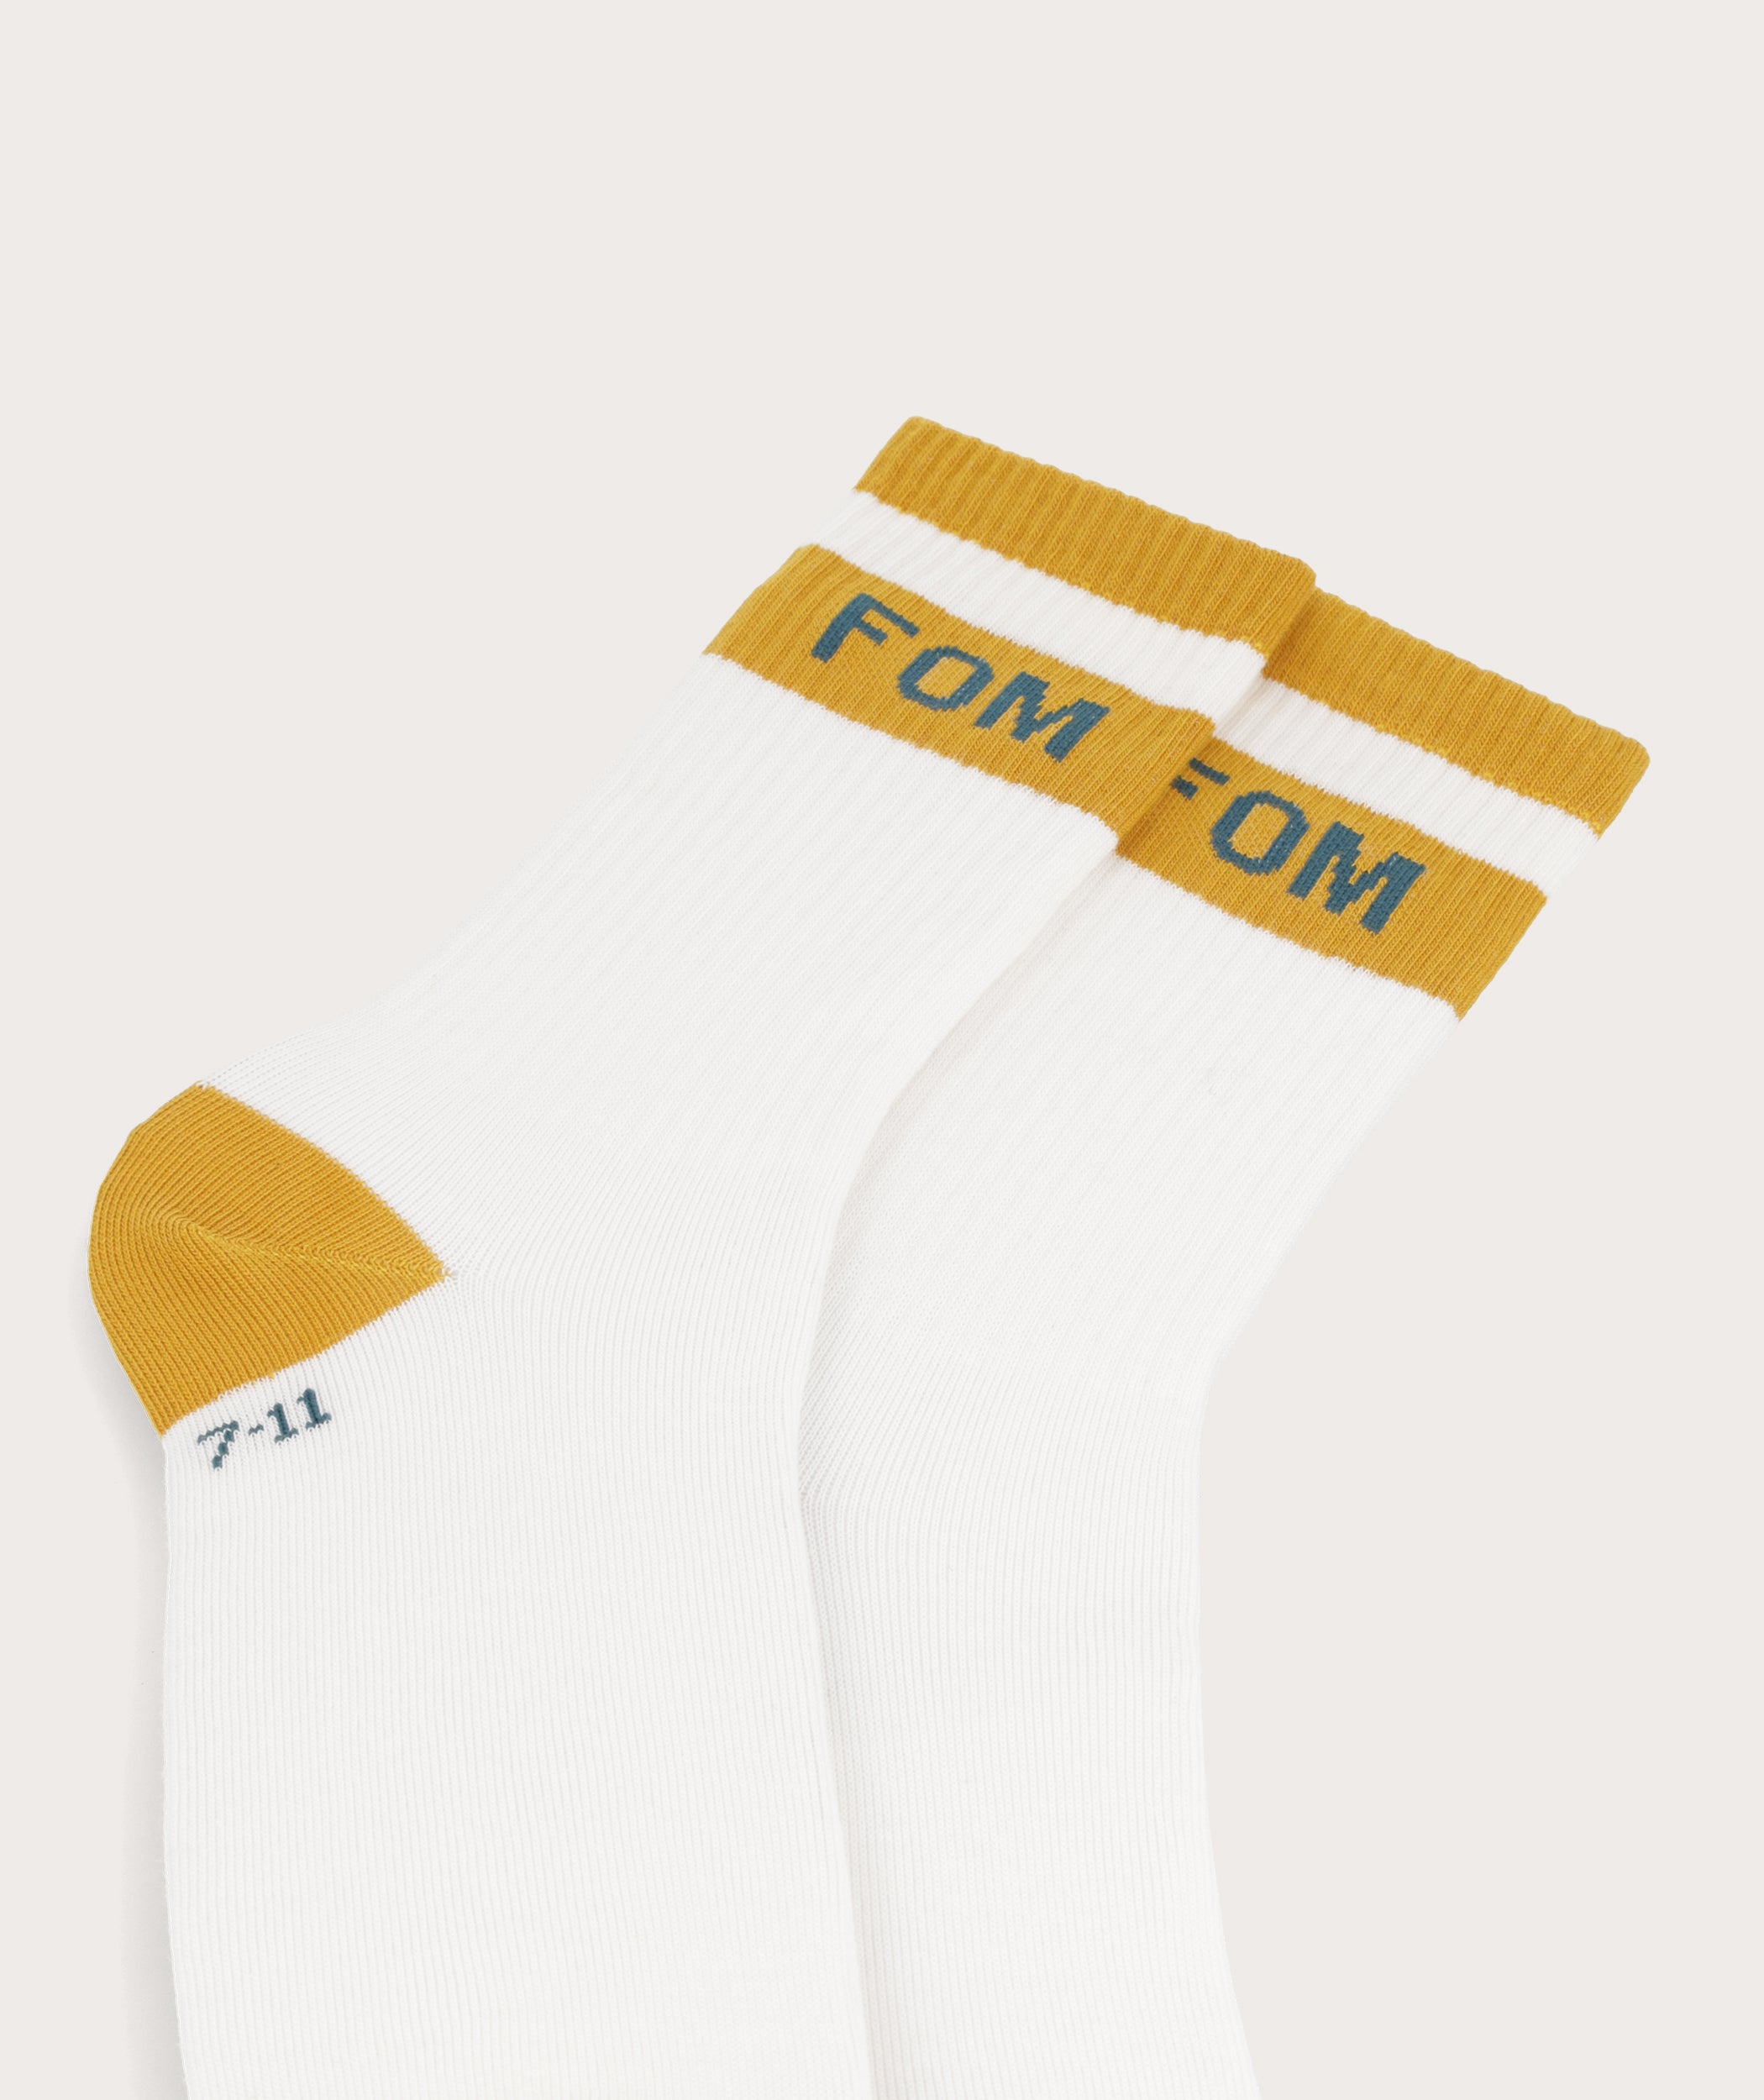 Socks FOM Crew - Cream & Mustard (Size 7-11)